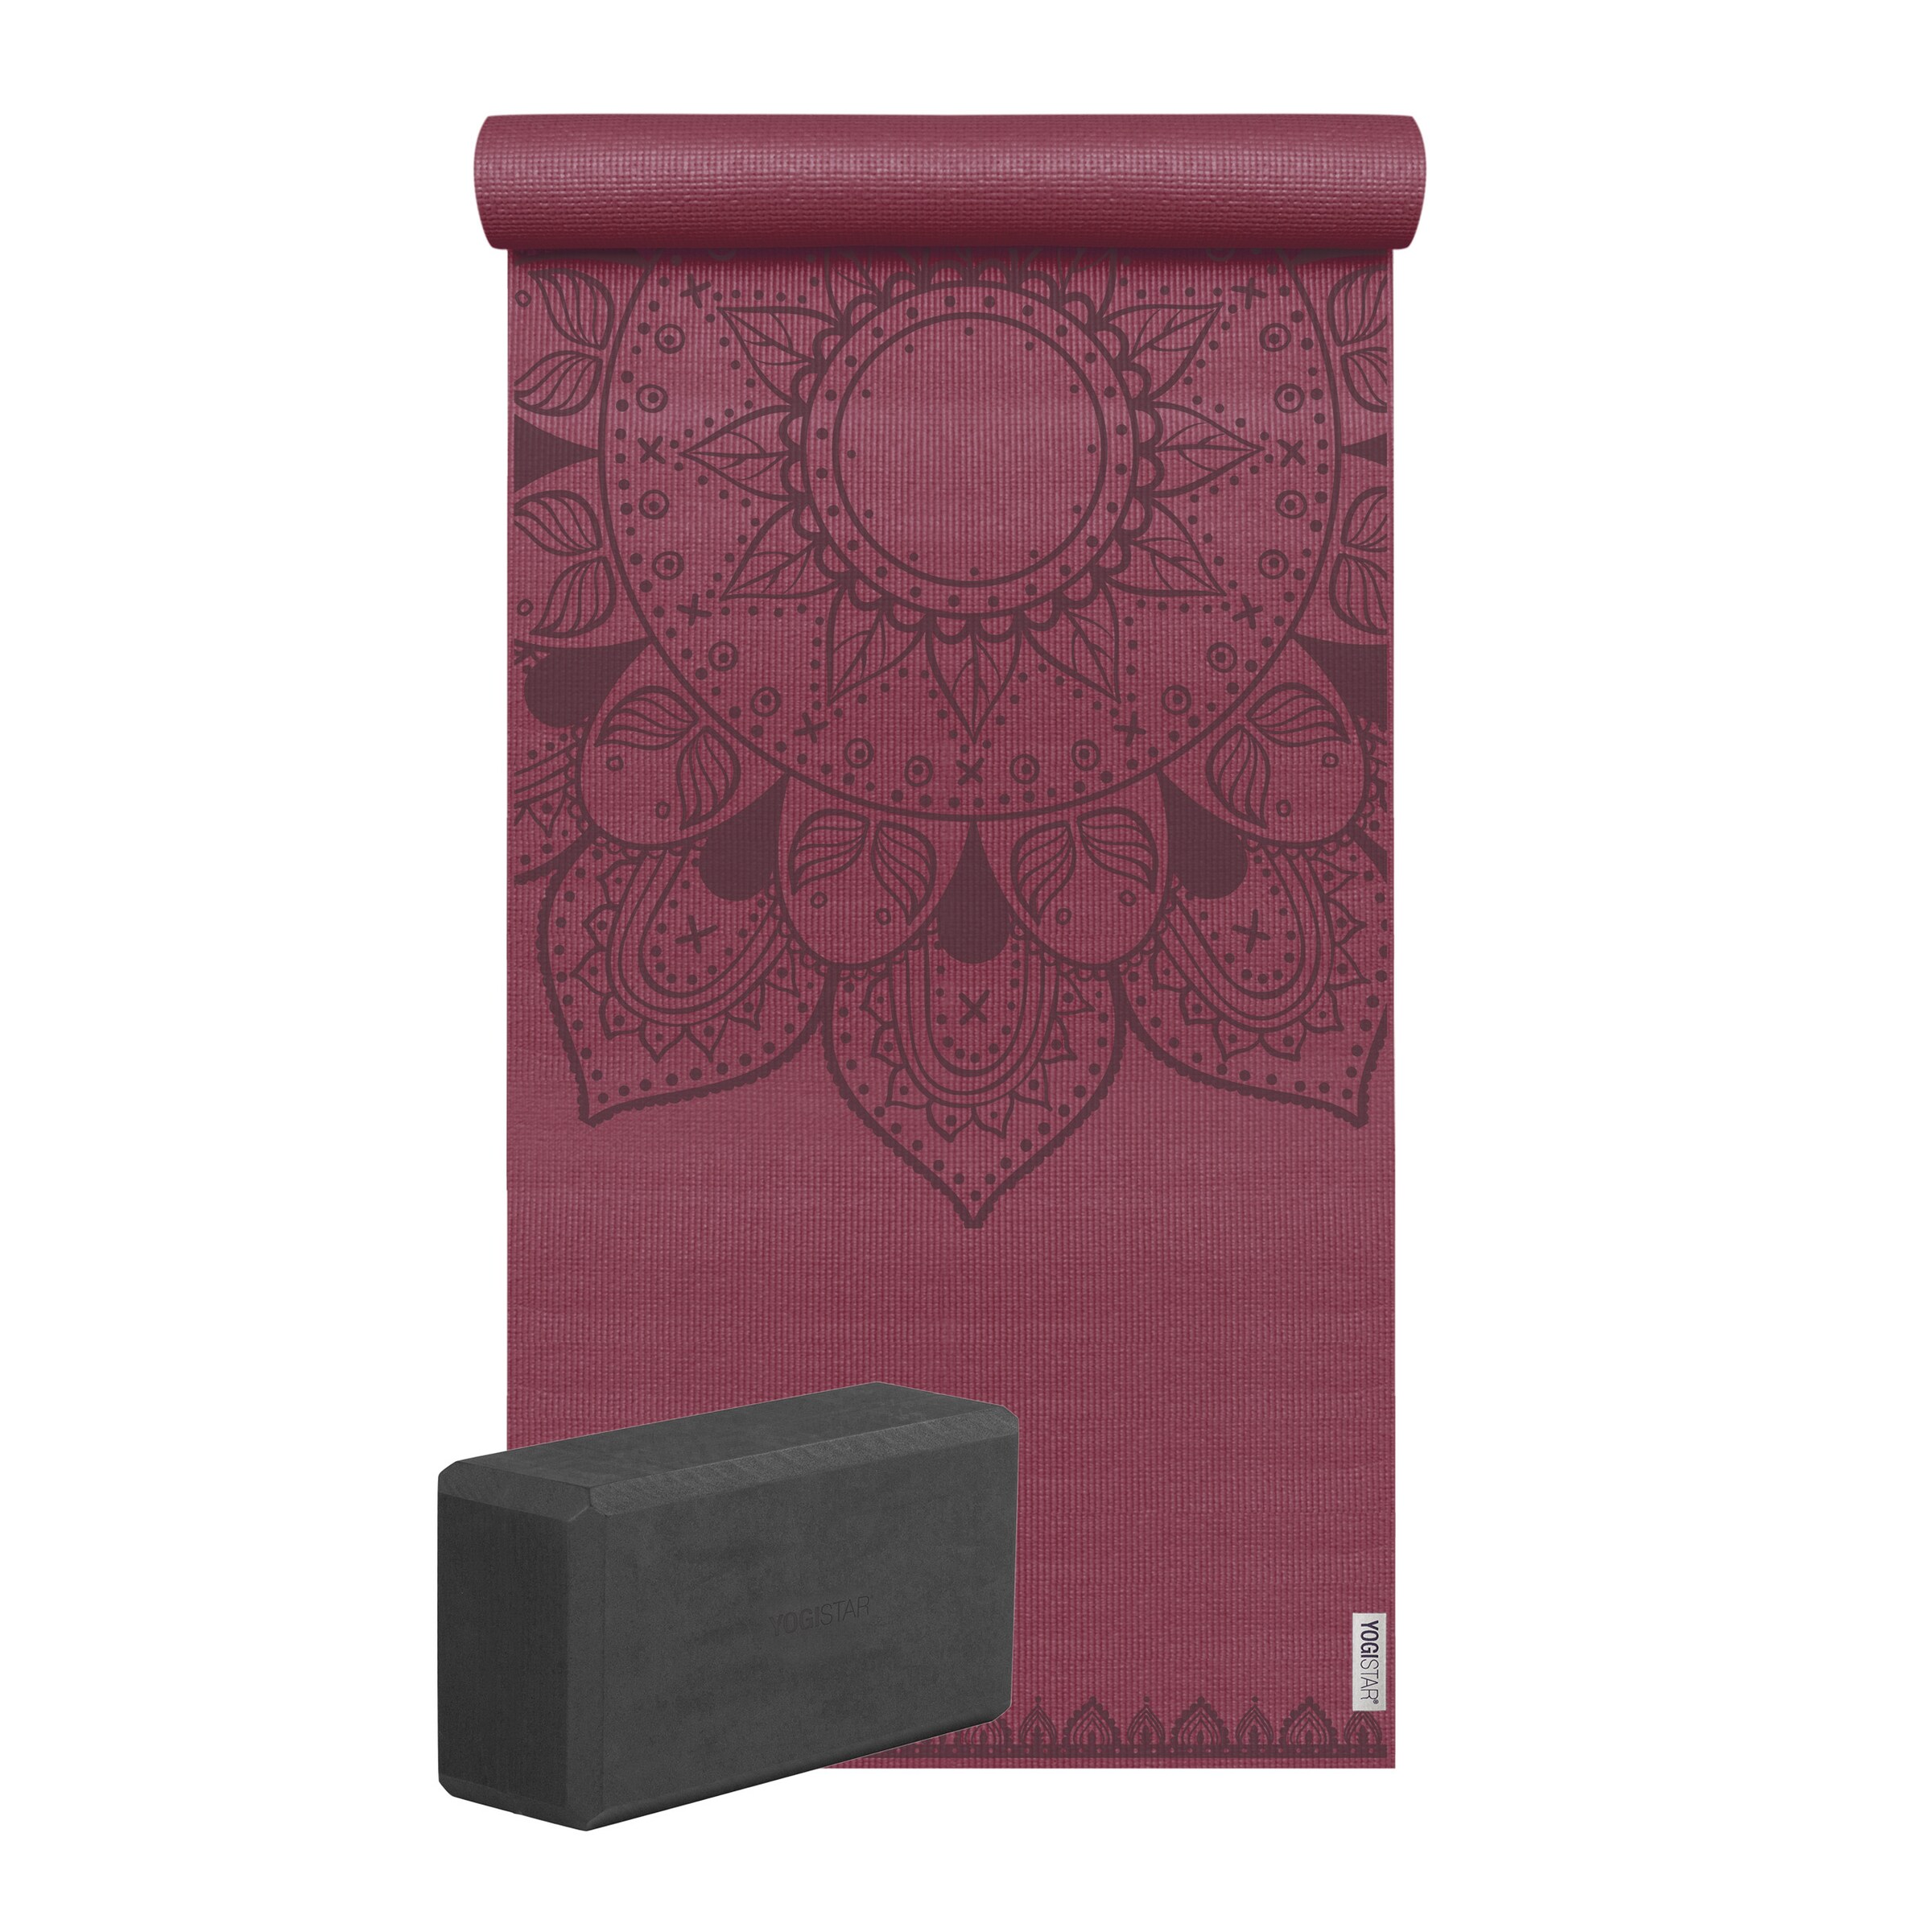 YOGISTAR.COM Yoga-set Starter Edition - Harmonic Mandala (yogamatte + 1 Yogablock) in Mischfarben 